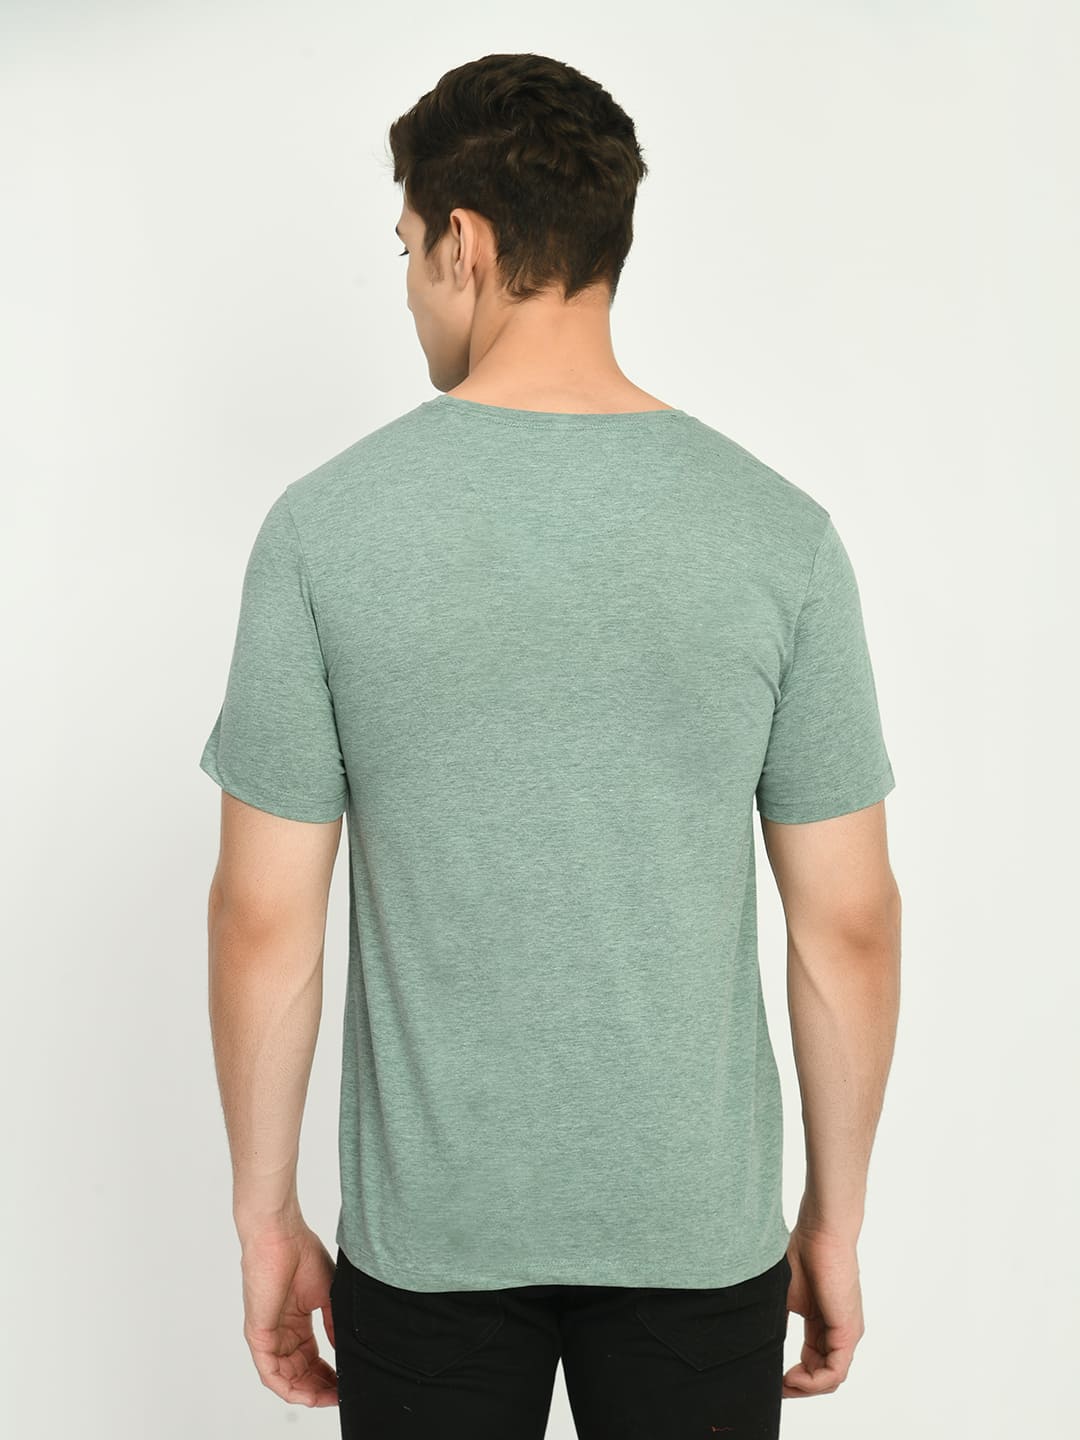 Men's Olive Solid Crew Neck T-Shirt